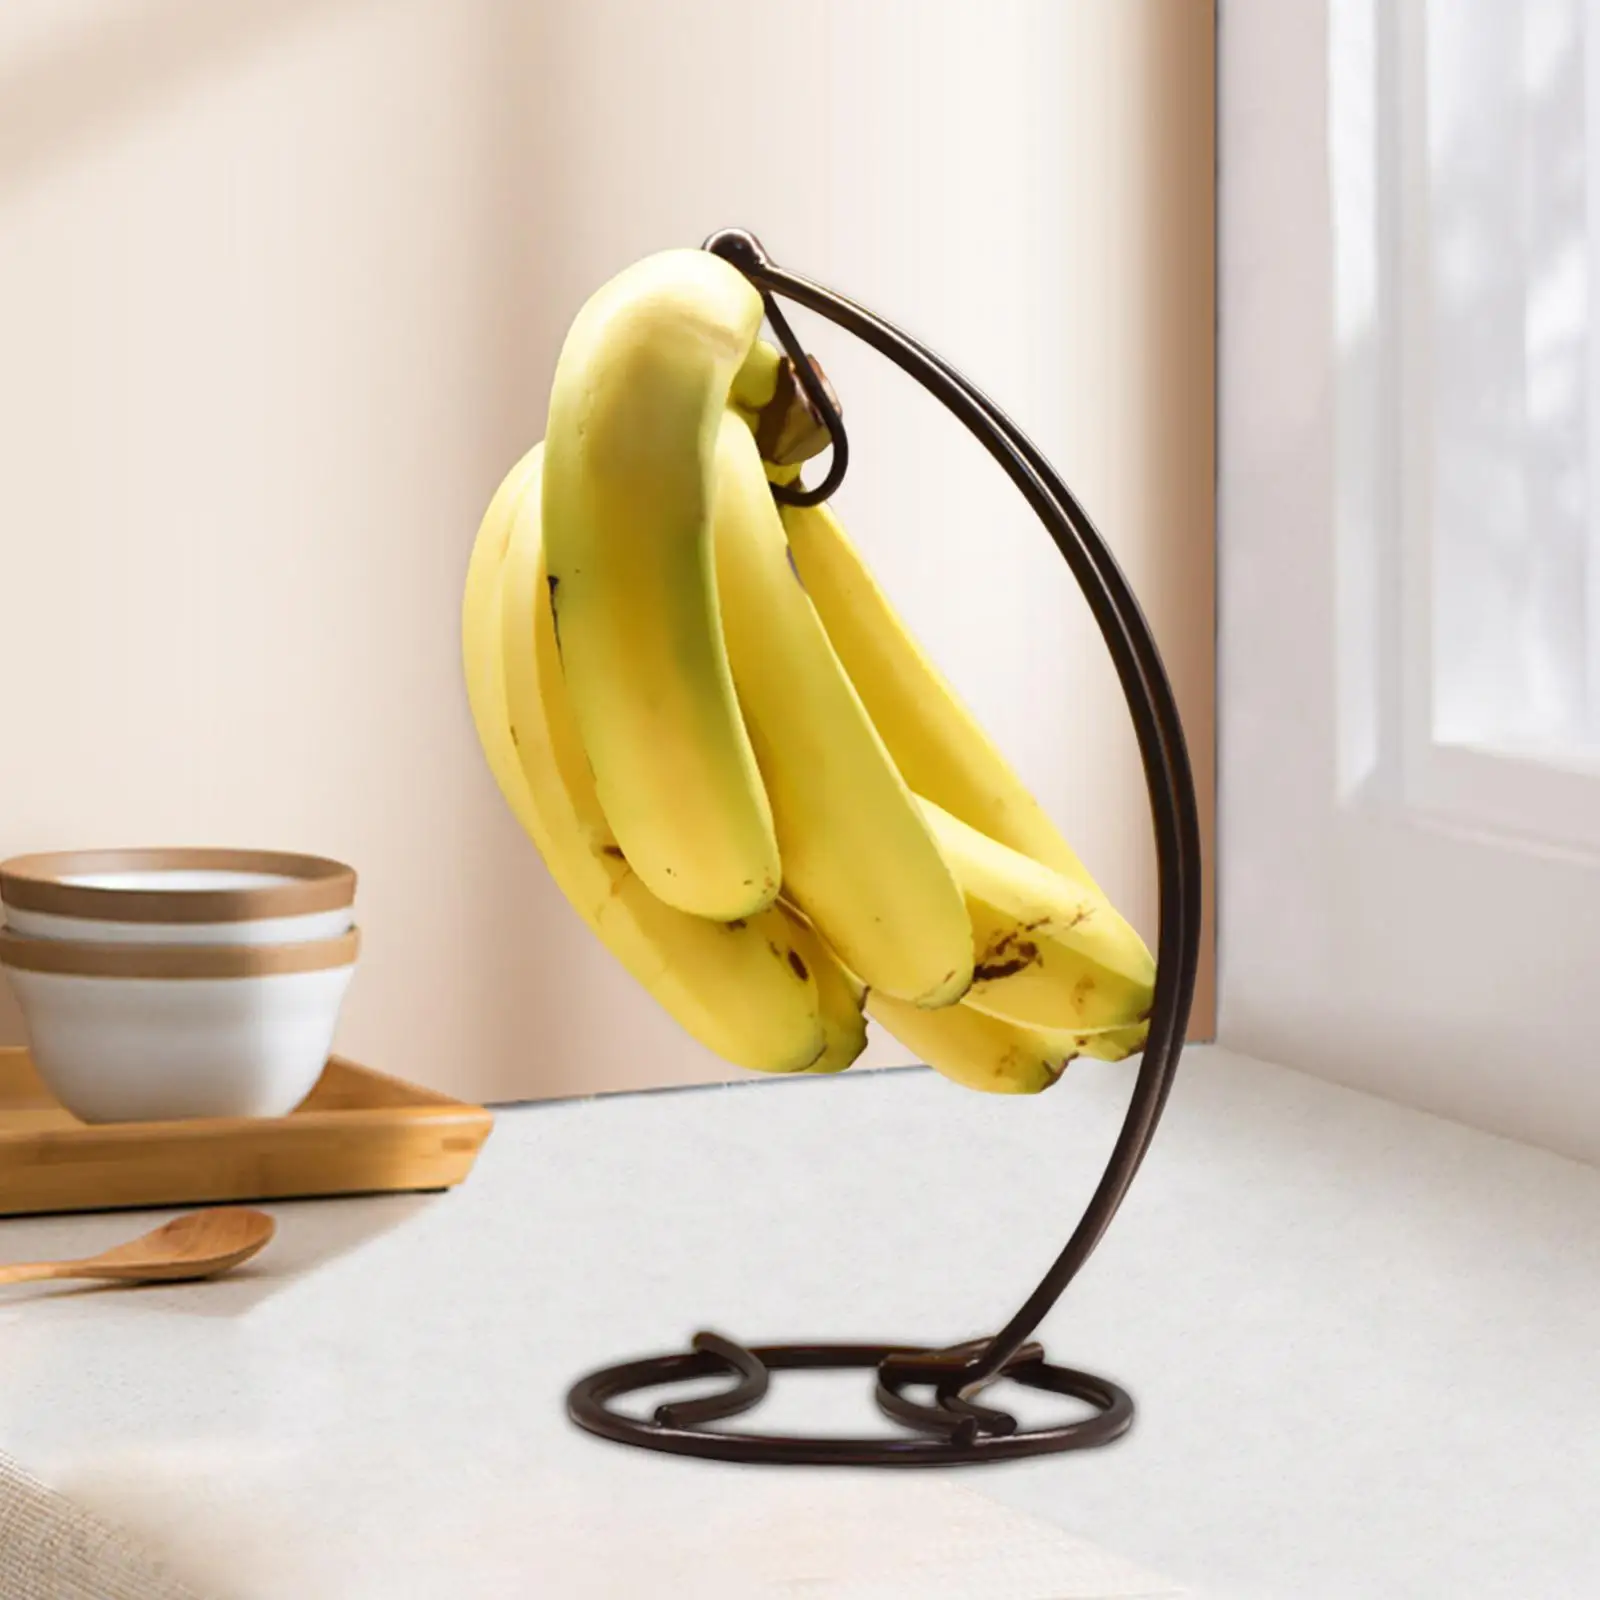 Banana Hanger Stand Iron Lightweight Banana Hook Banana Holder Tree Stand Hook Banana Stand for Kitchen Dining Table Countertop